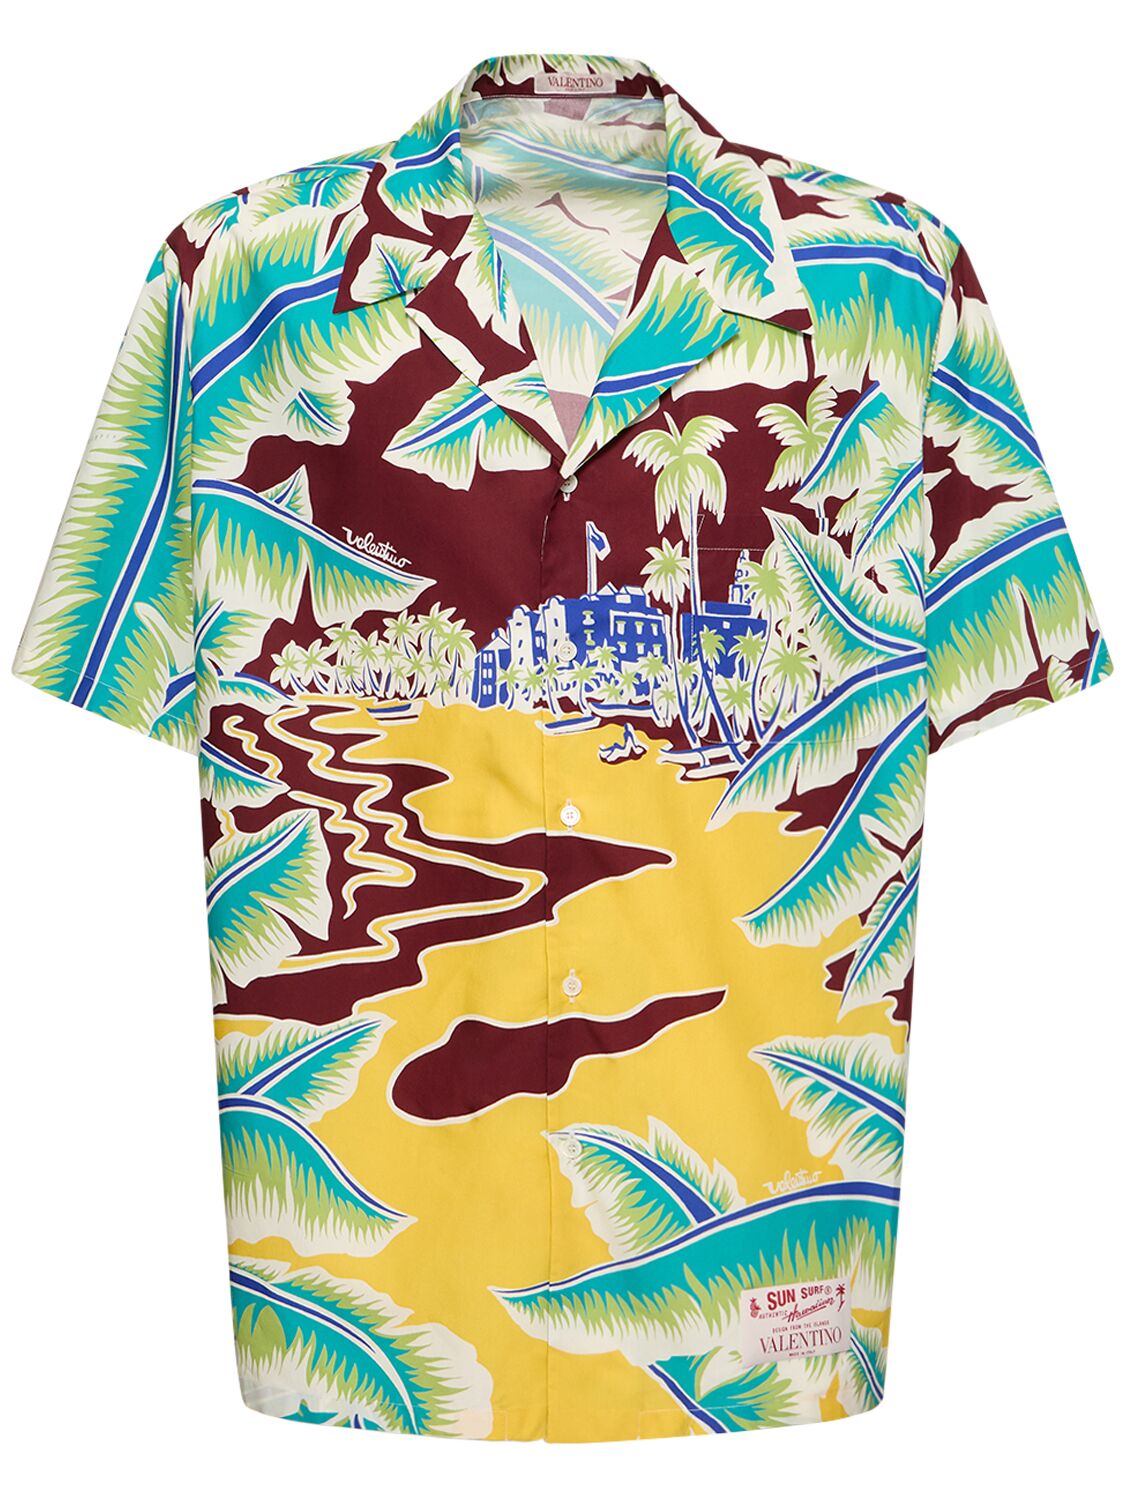 Image of Surf Rider Printed Cotton Bowling Shirt